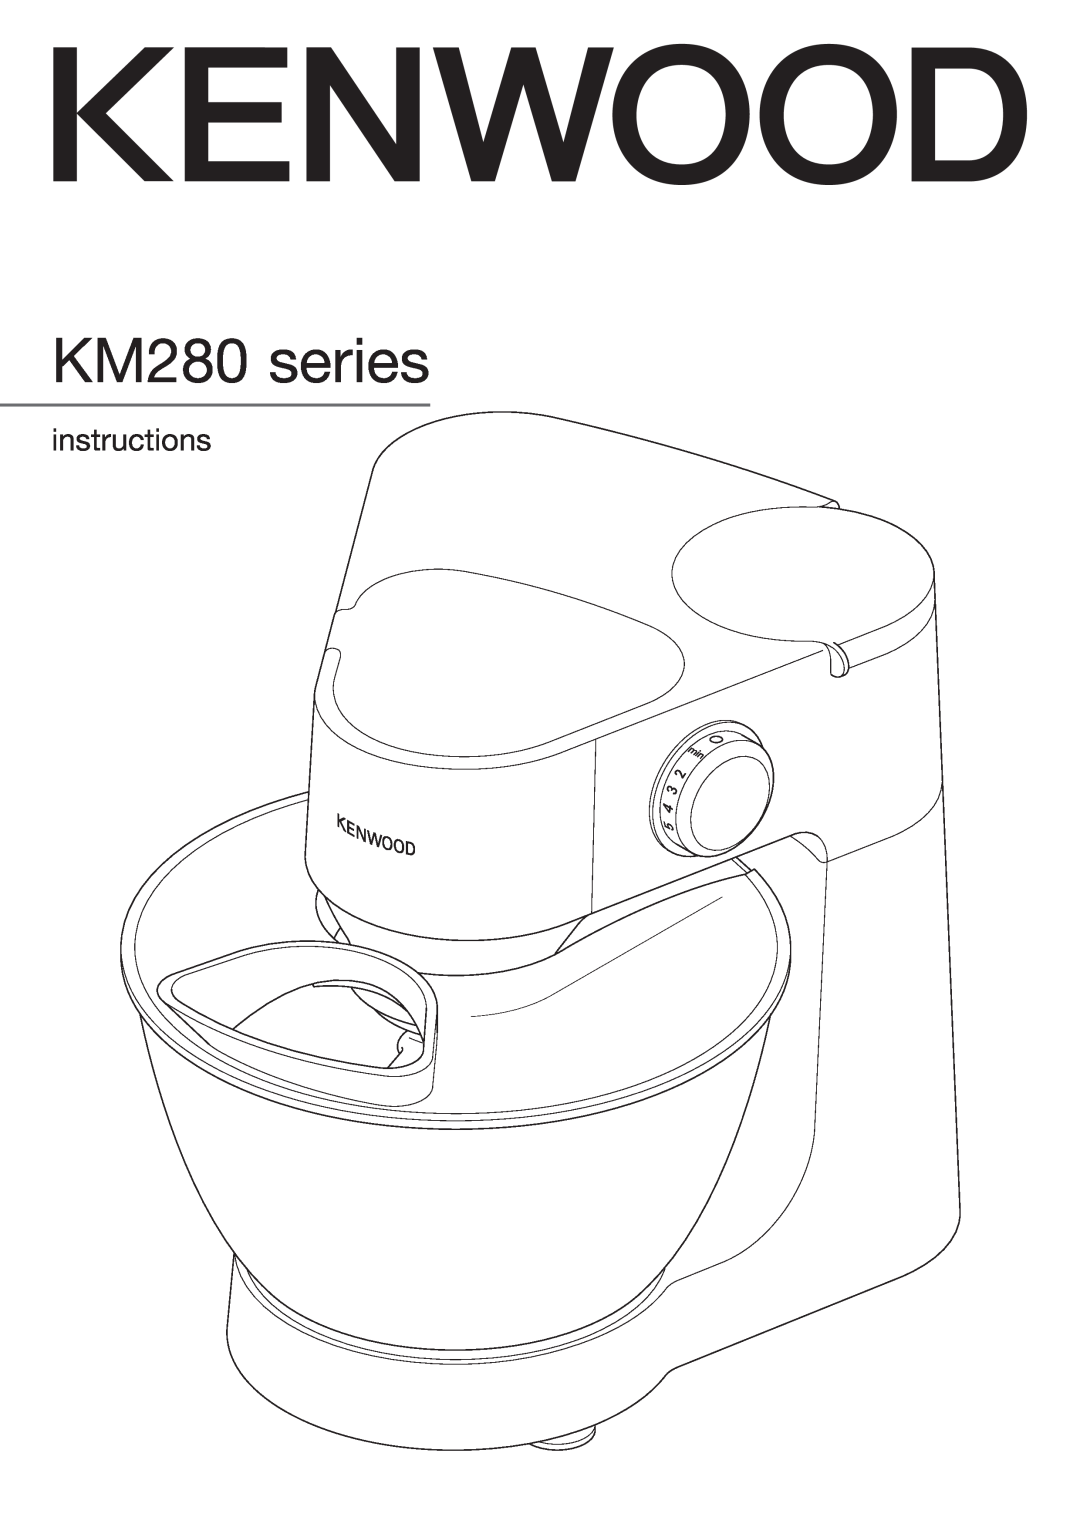 Kenwood manual KM280 series, instructions 